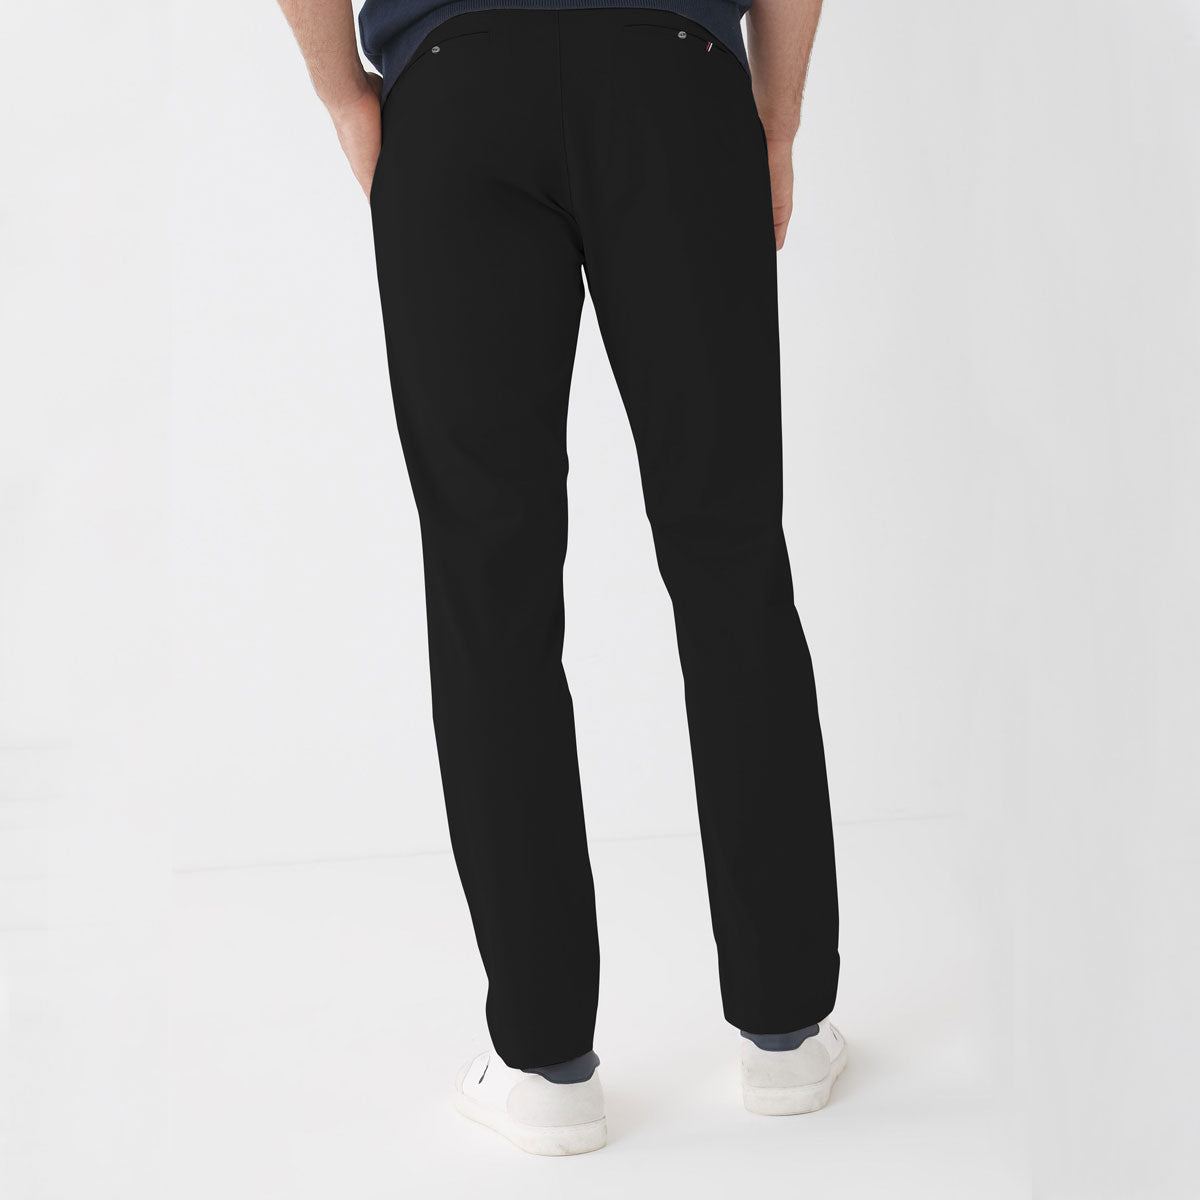 Buy SHEIN Women's High-Rise Step-Hem Skinny Pants Black XS at Amazon.in